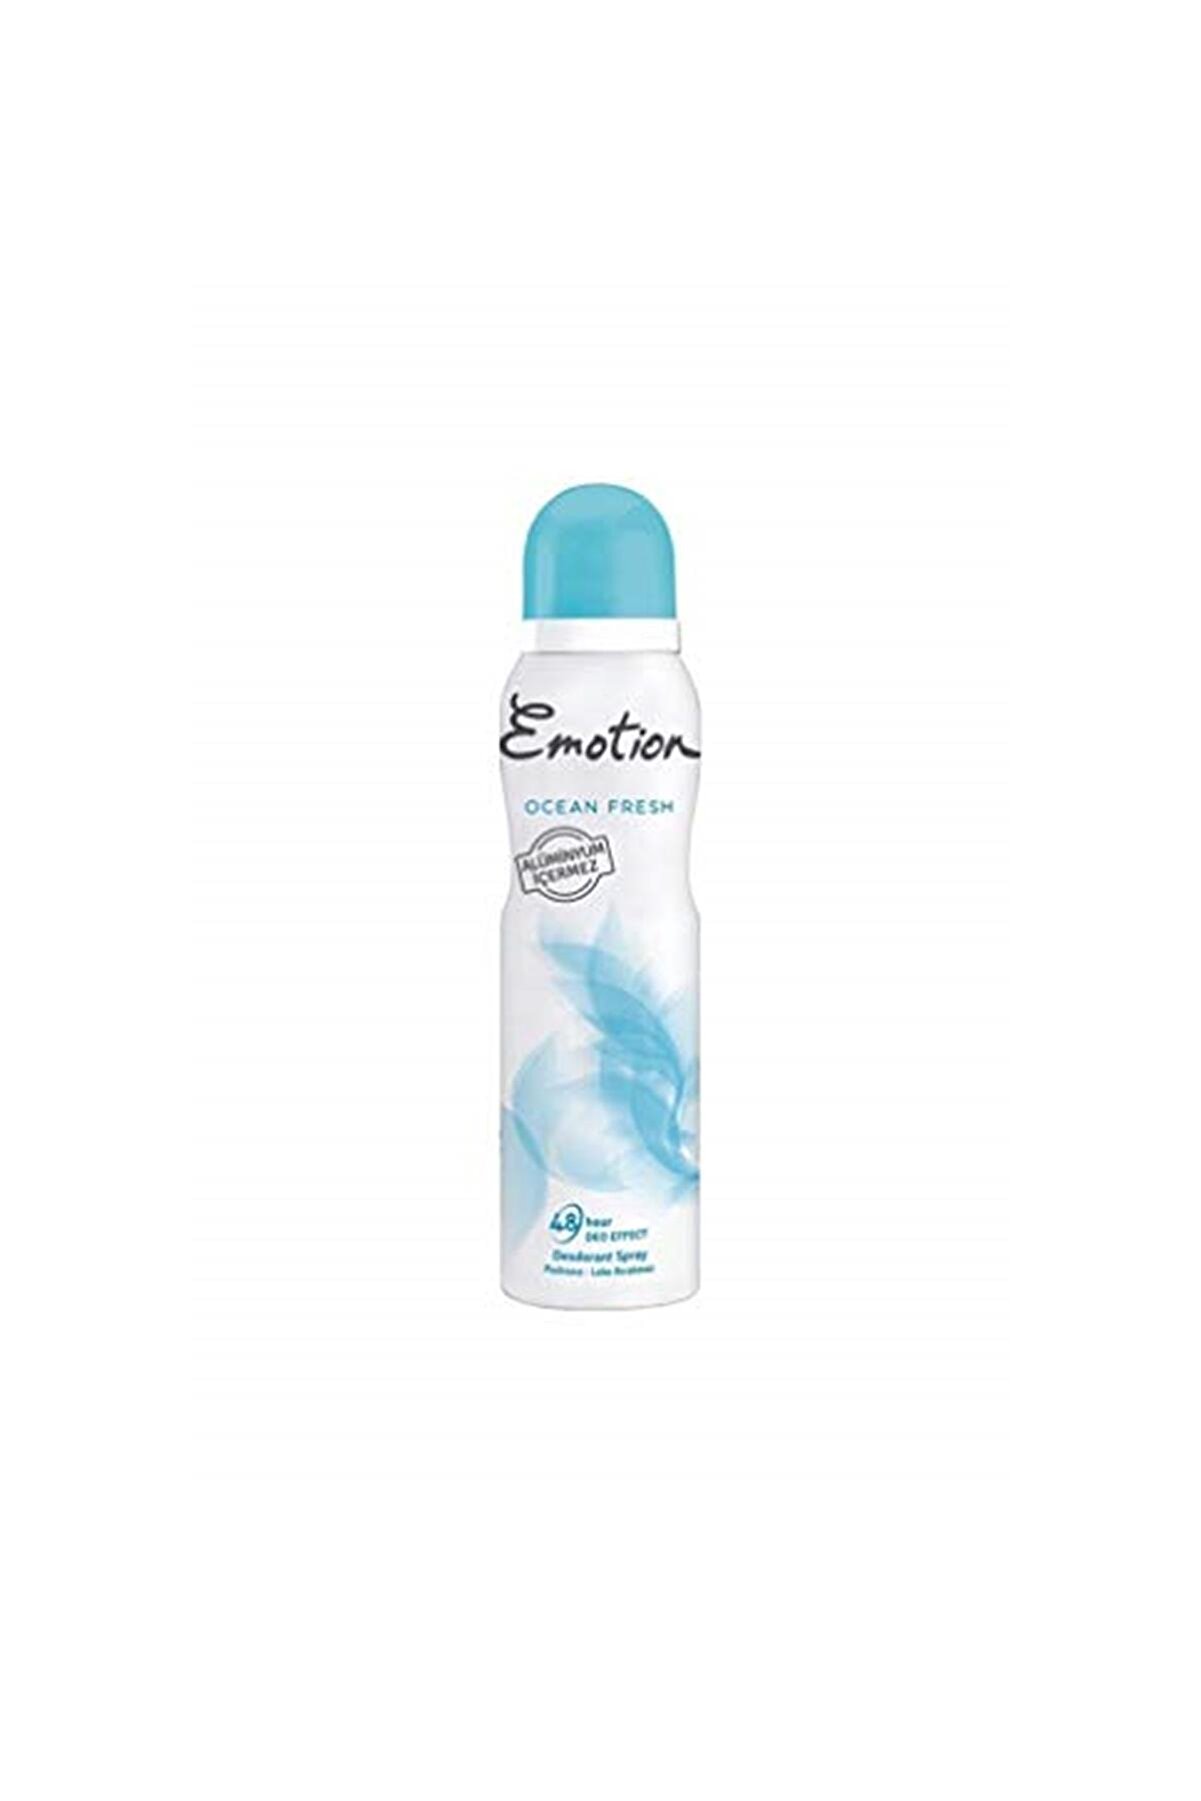 Emotion Marka: Emotion Ocean Fresh Kadın Sprey Deodorant 150 Ml Kategori: Deodorant